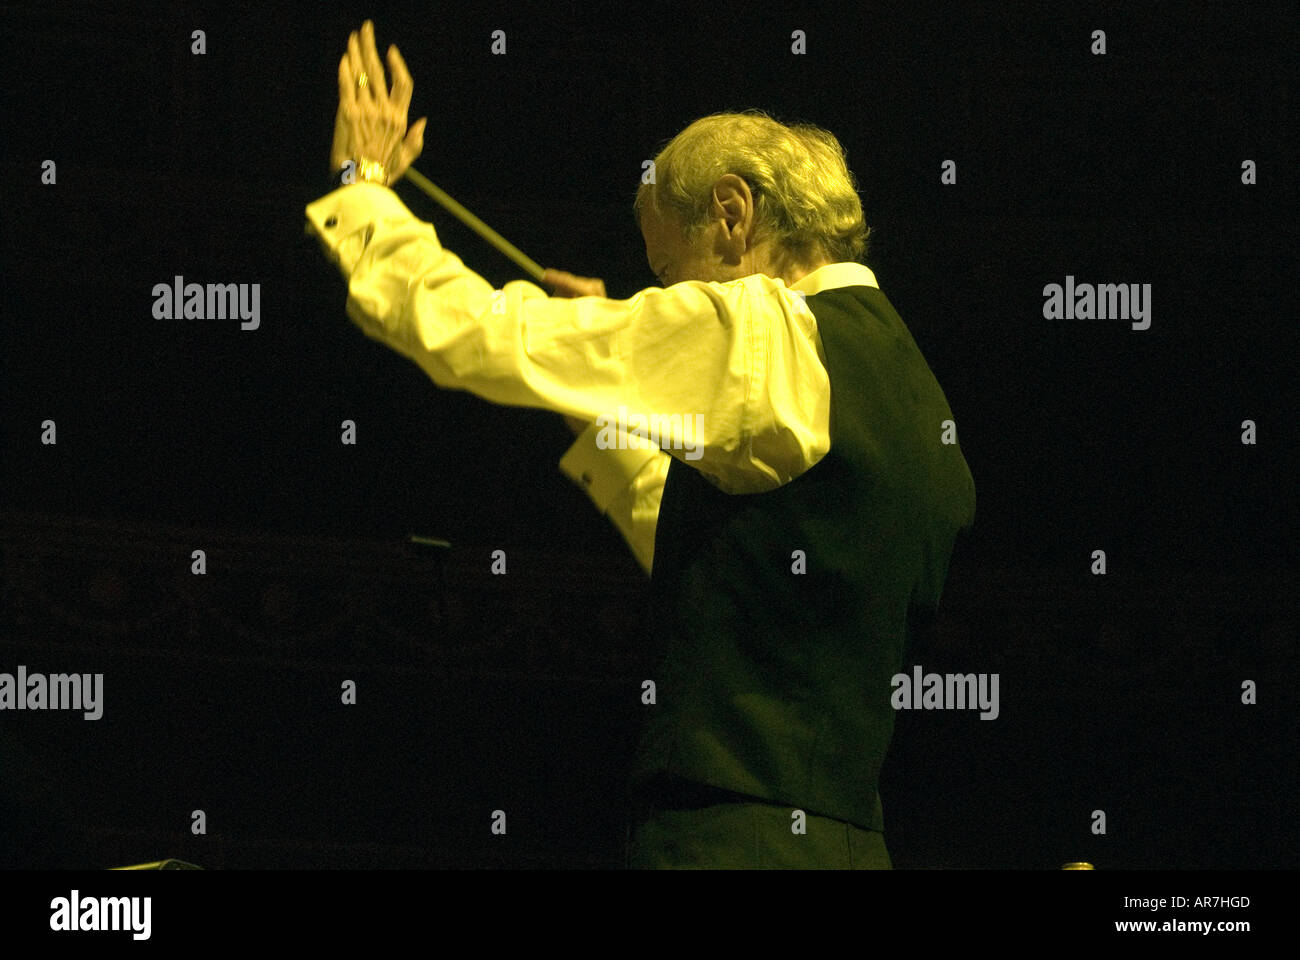 British film composer John Barry in concert at Royal Albert Hall, London, 28th September 2006,UK. Stock Photo